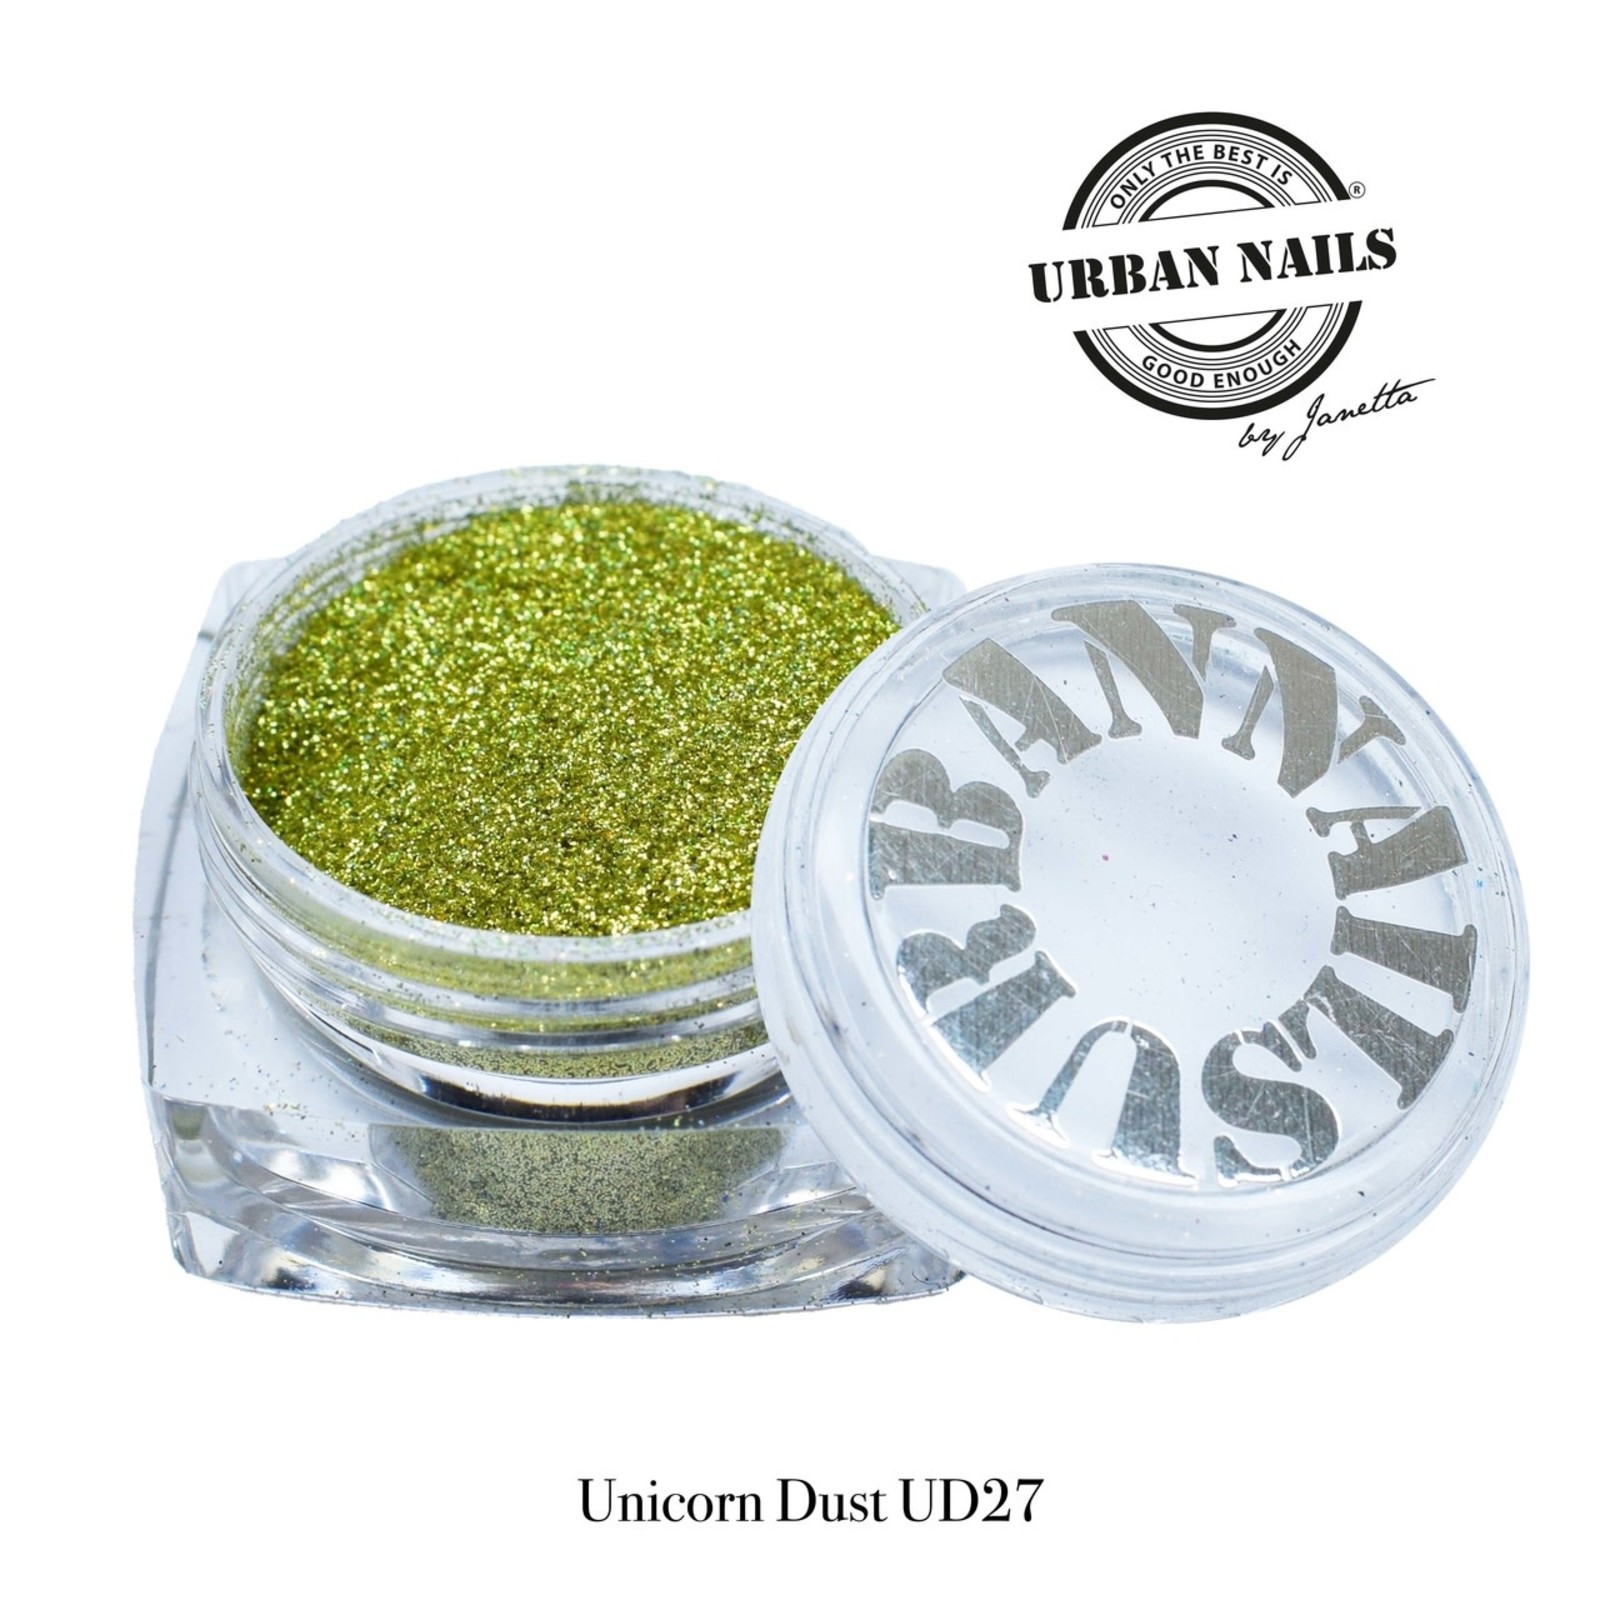 Urban nails Unicorn Dust UD27